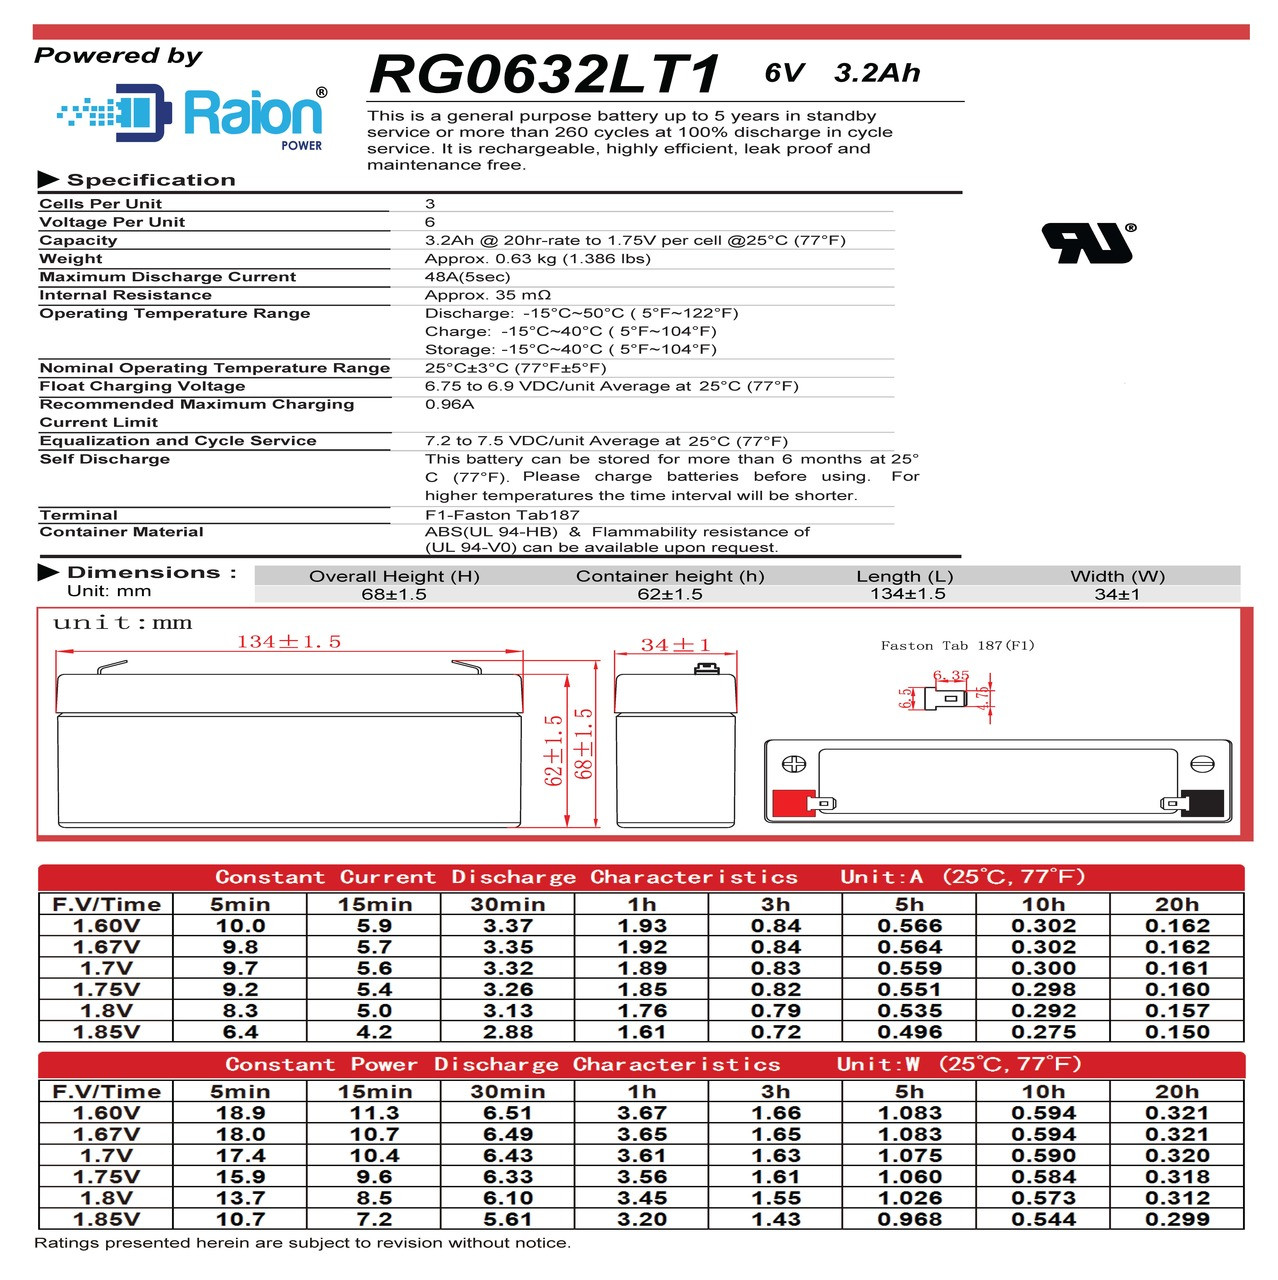 Raion Power RG0632LT1 6V 3.2Ah Battery Data Sheet for Alaris Medical 580 Infusion Pump (Keofeed II)